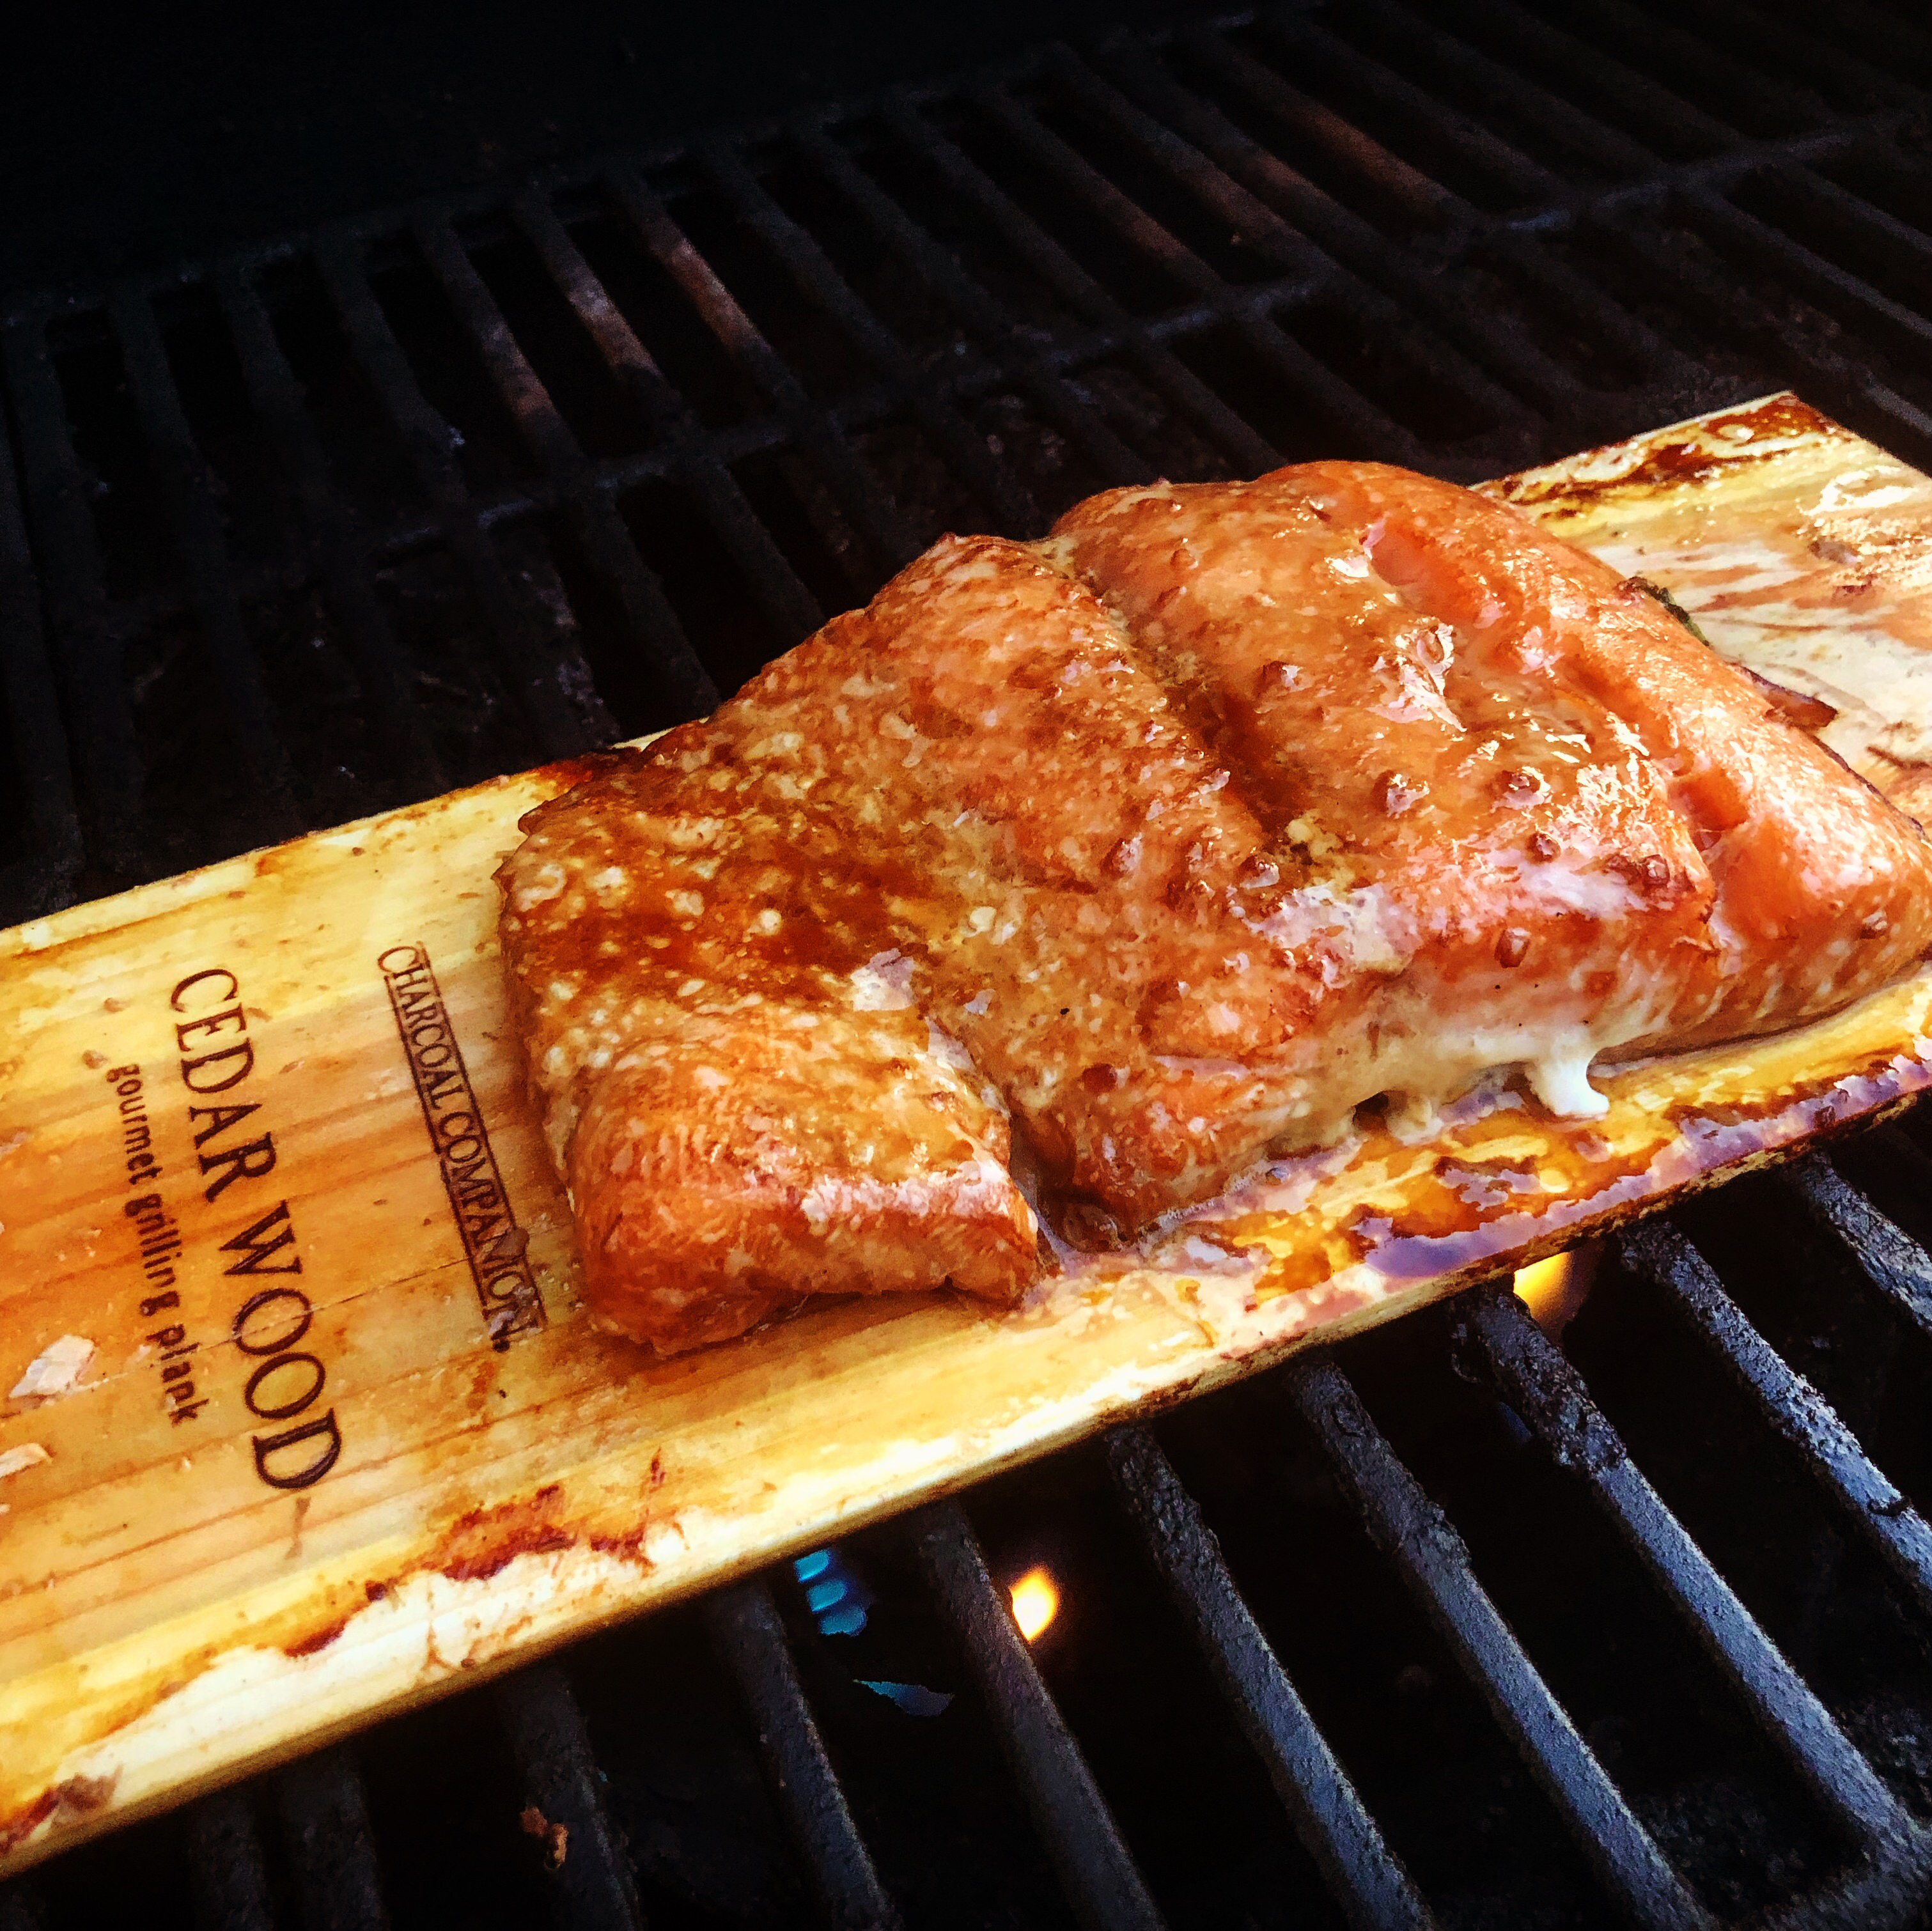 Cedar Planked Salmon 